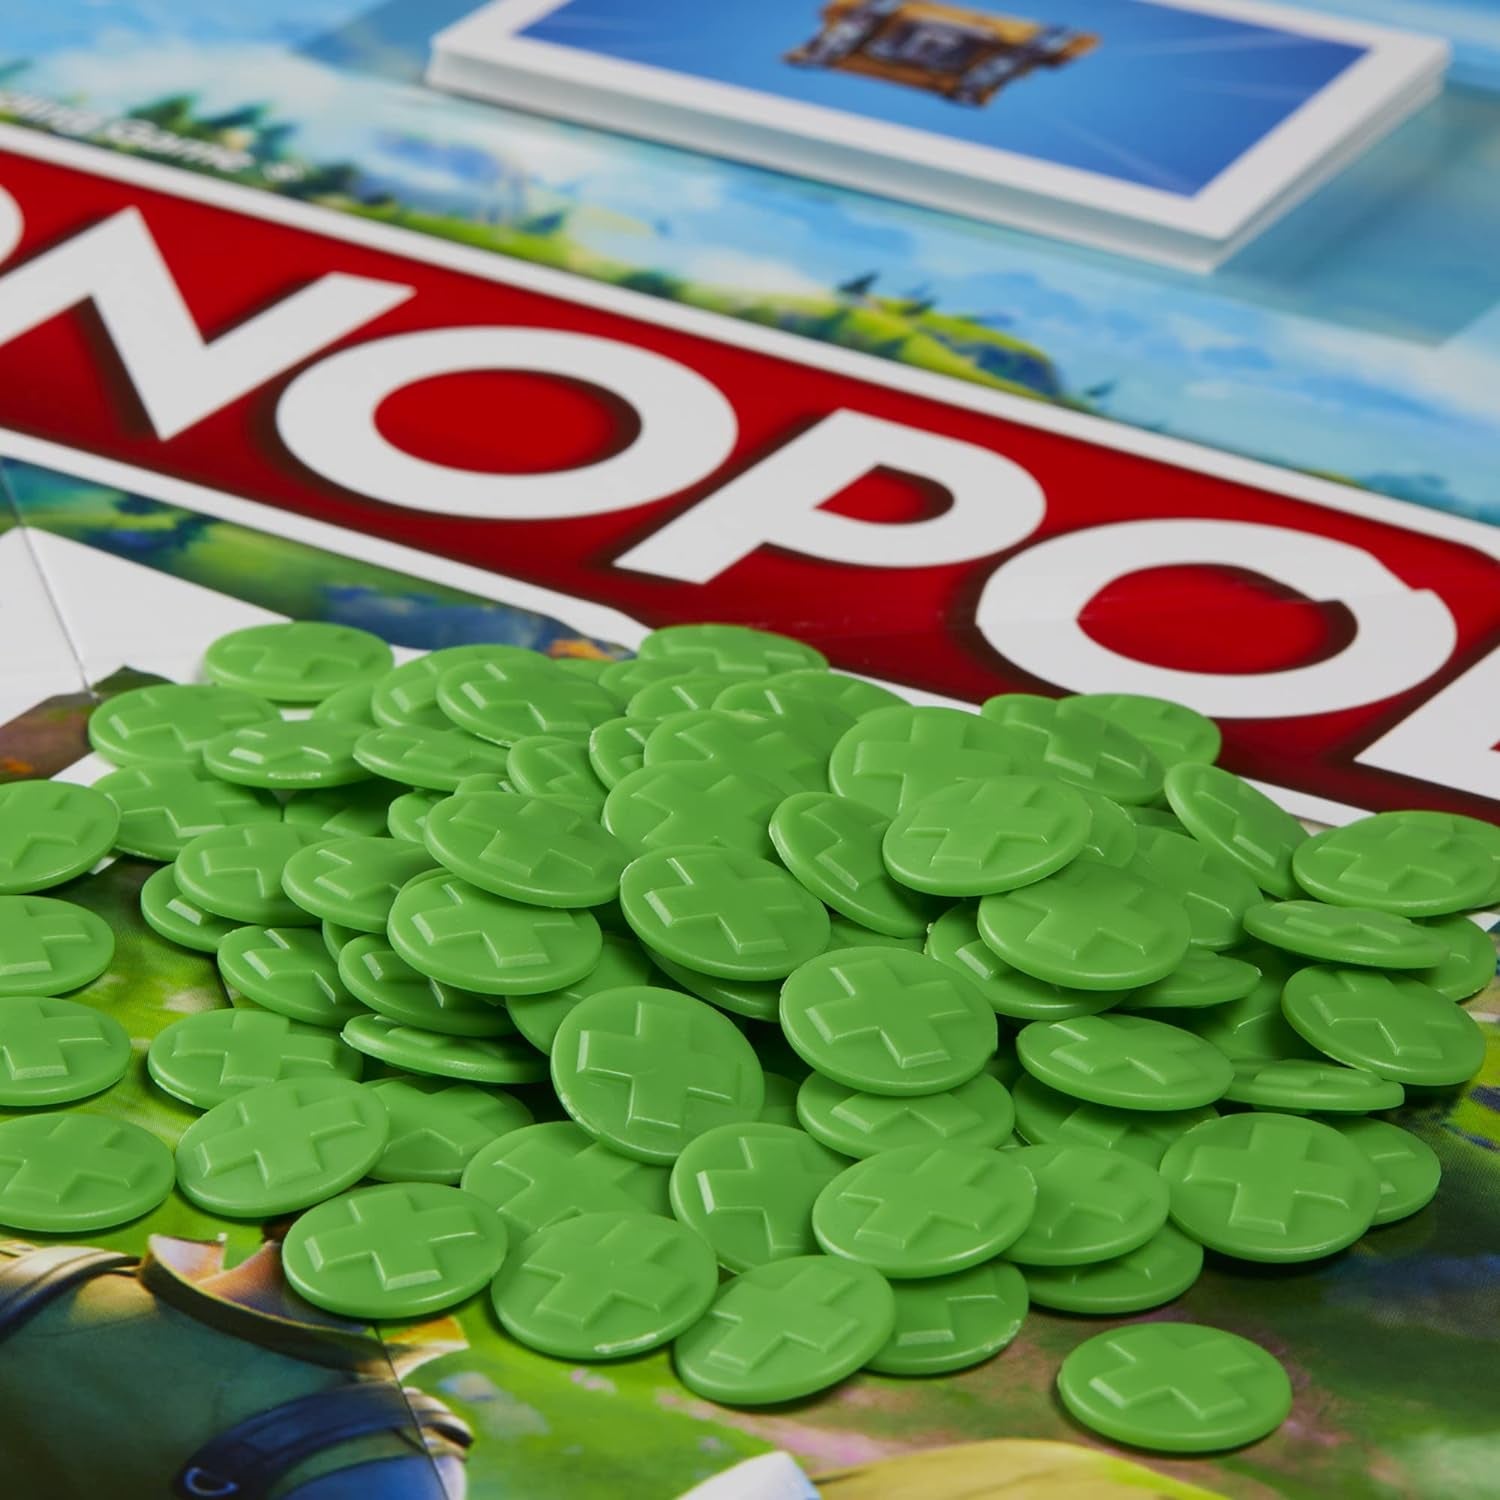 Hasbro Monopoly: Fortnite Collectors Edition Board Game – S&D Kids